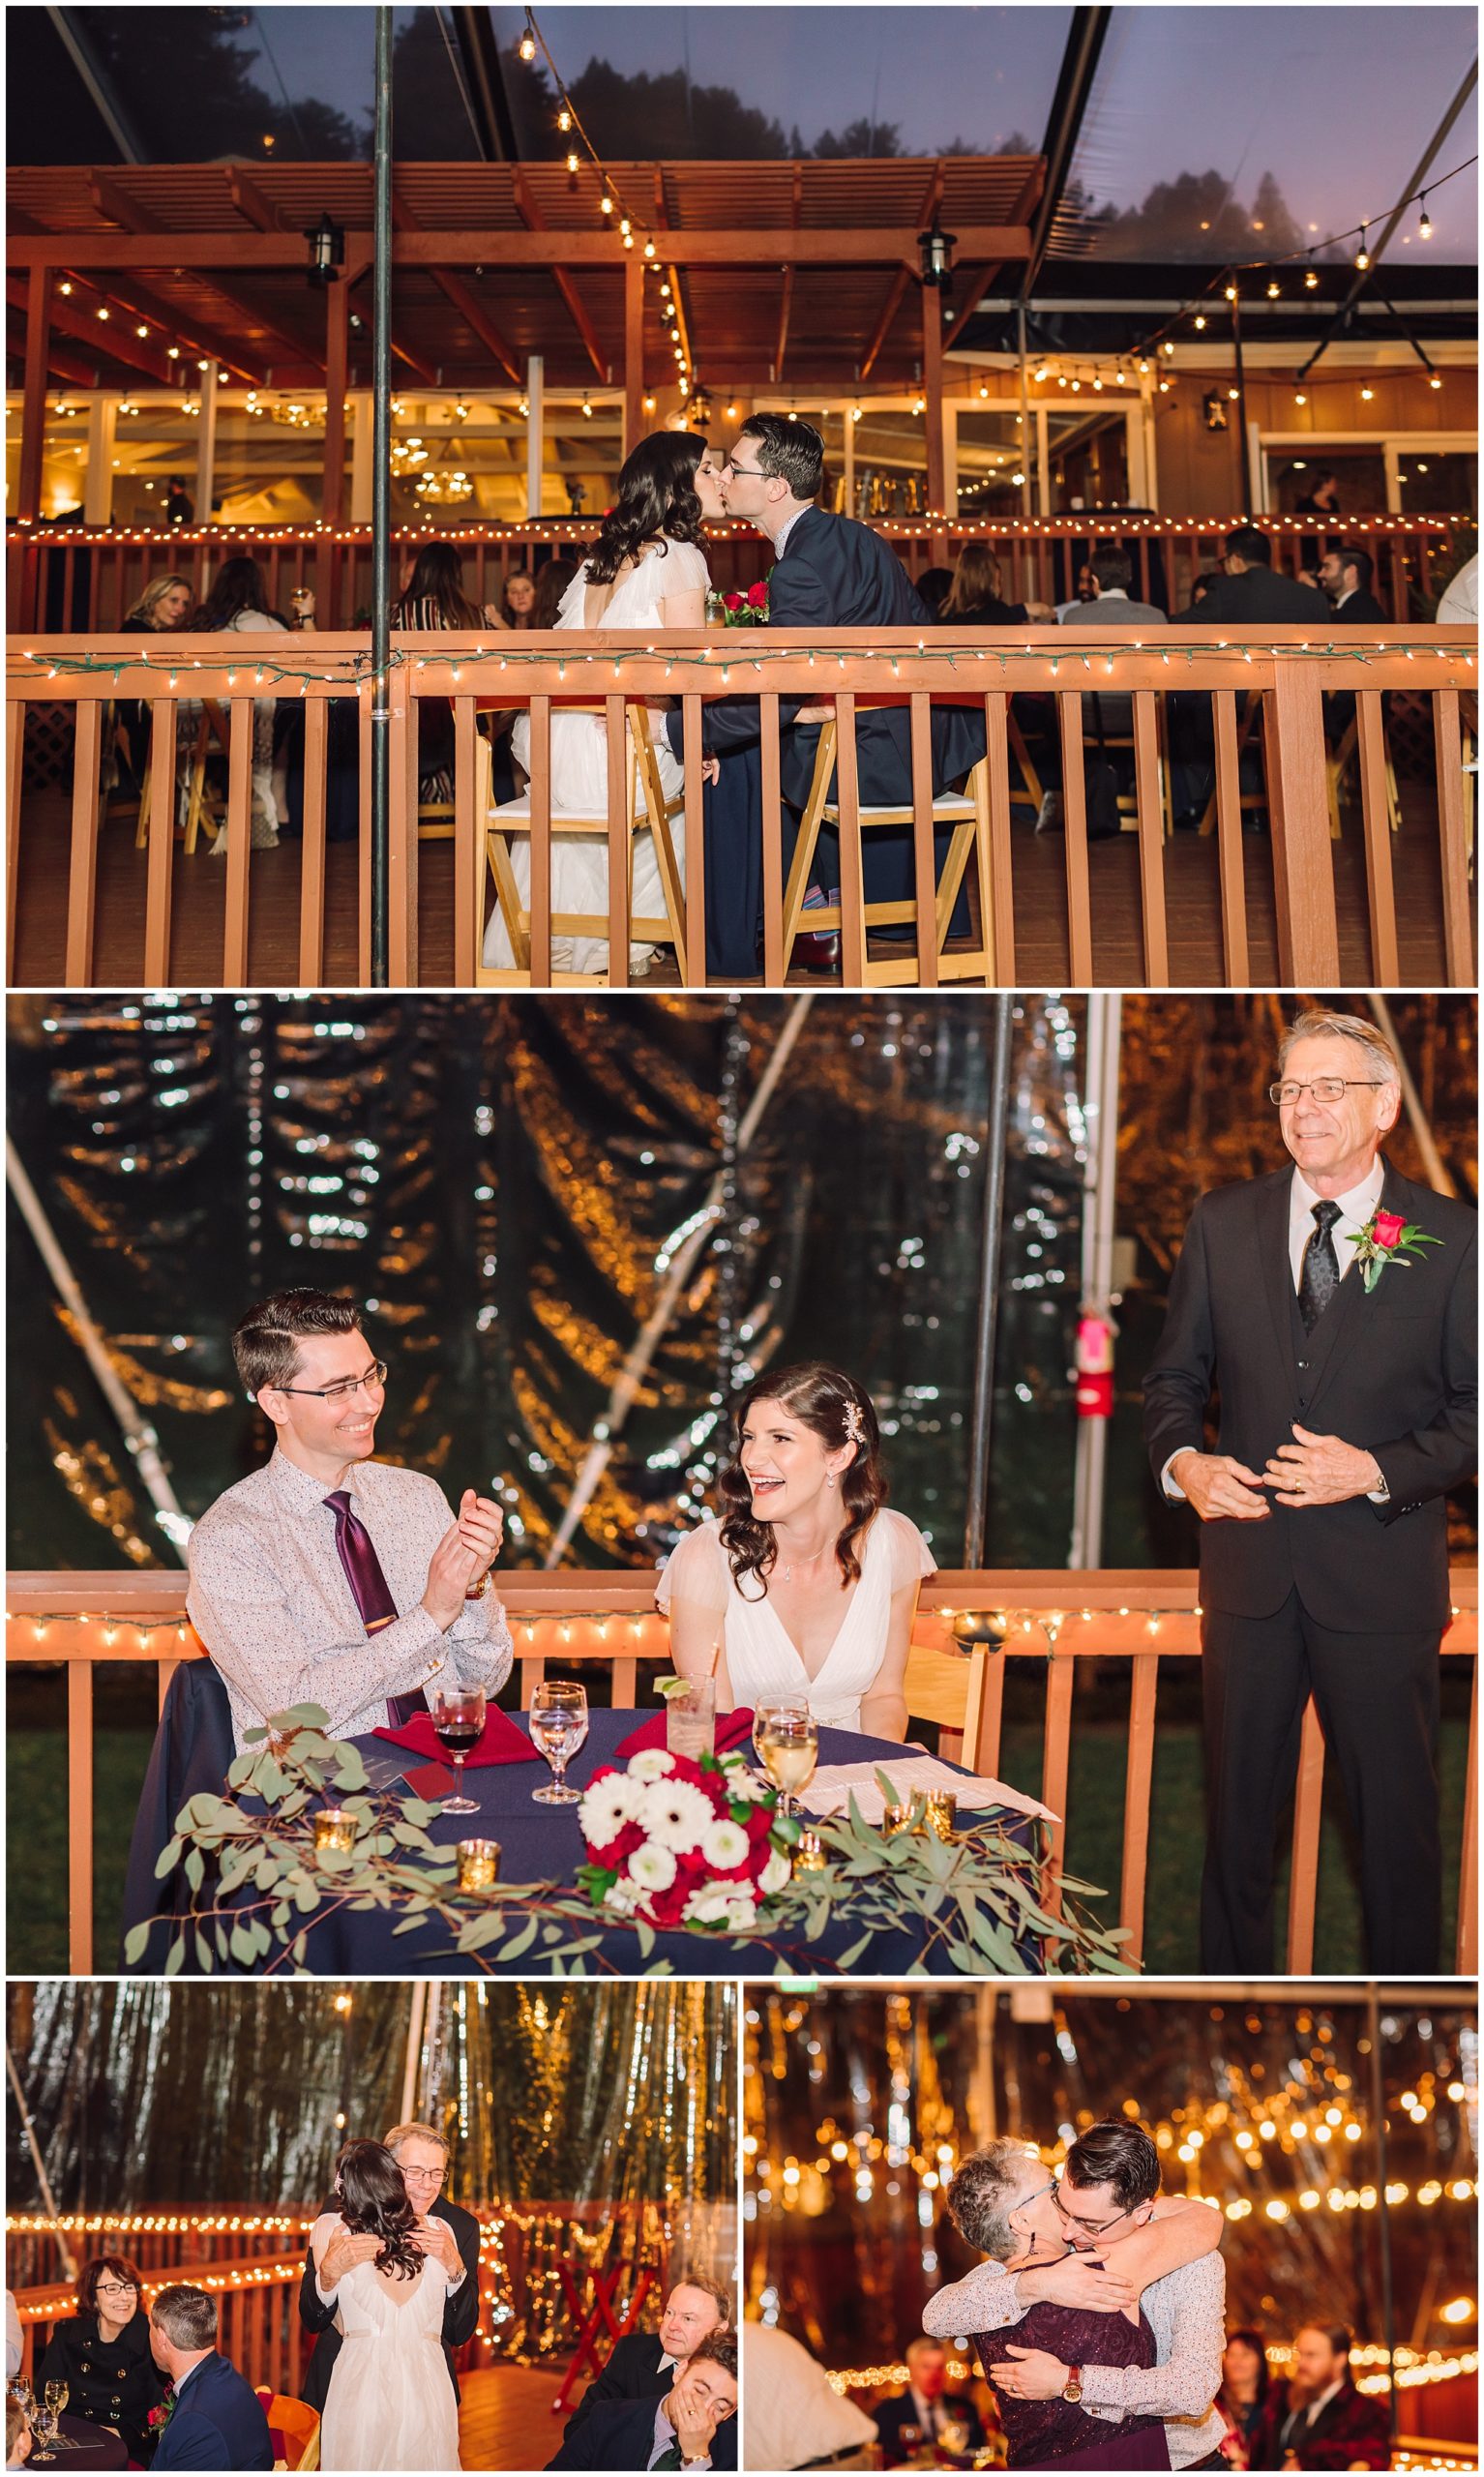 Allison + Rob | The Mountain Terrace Wedding